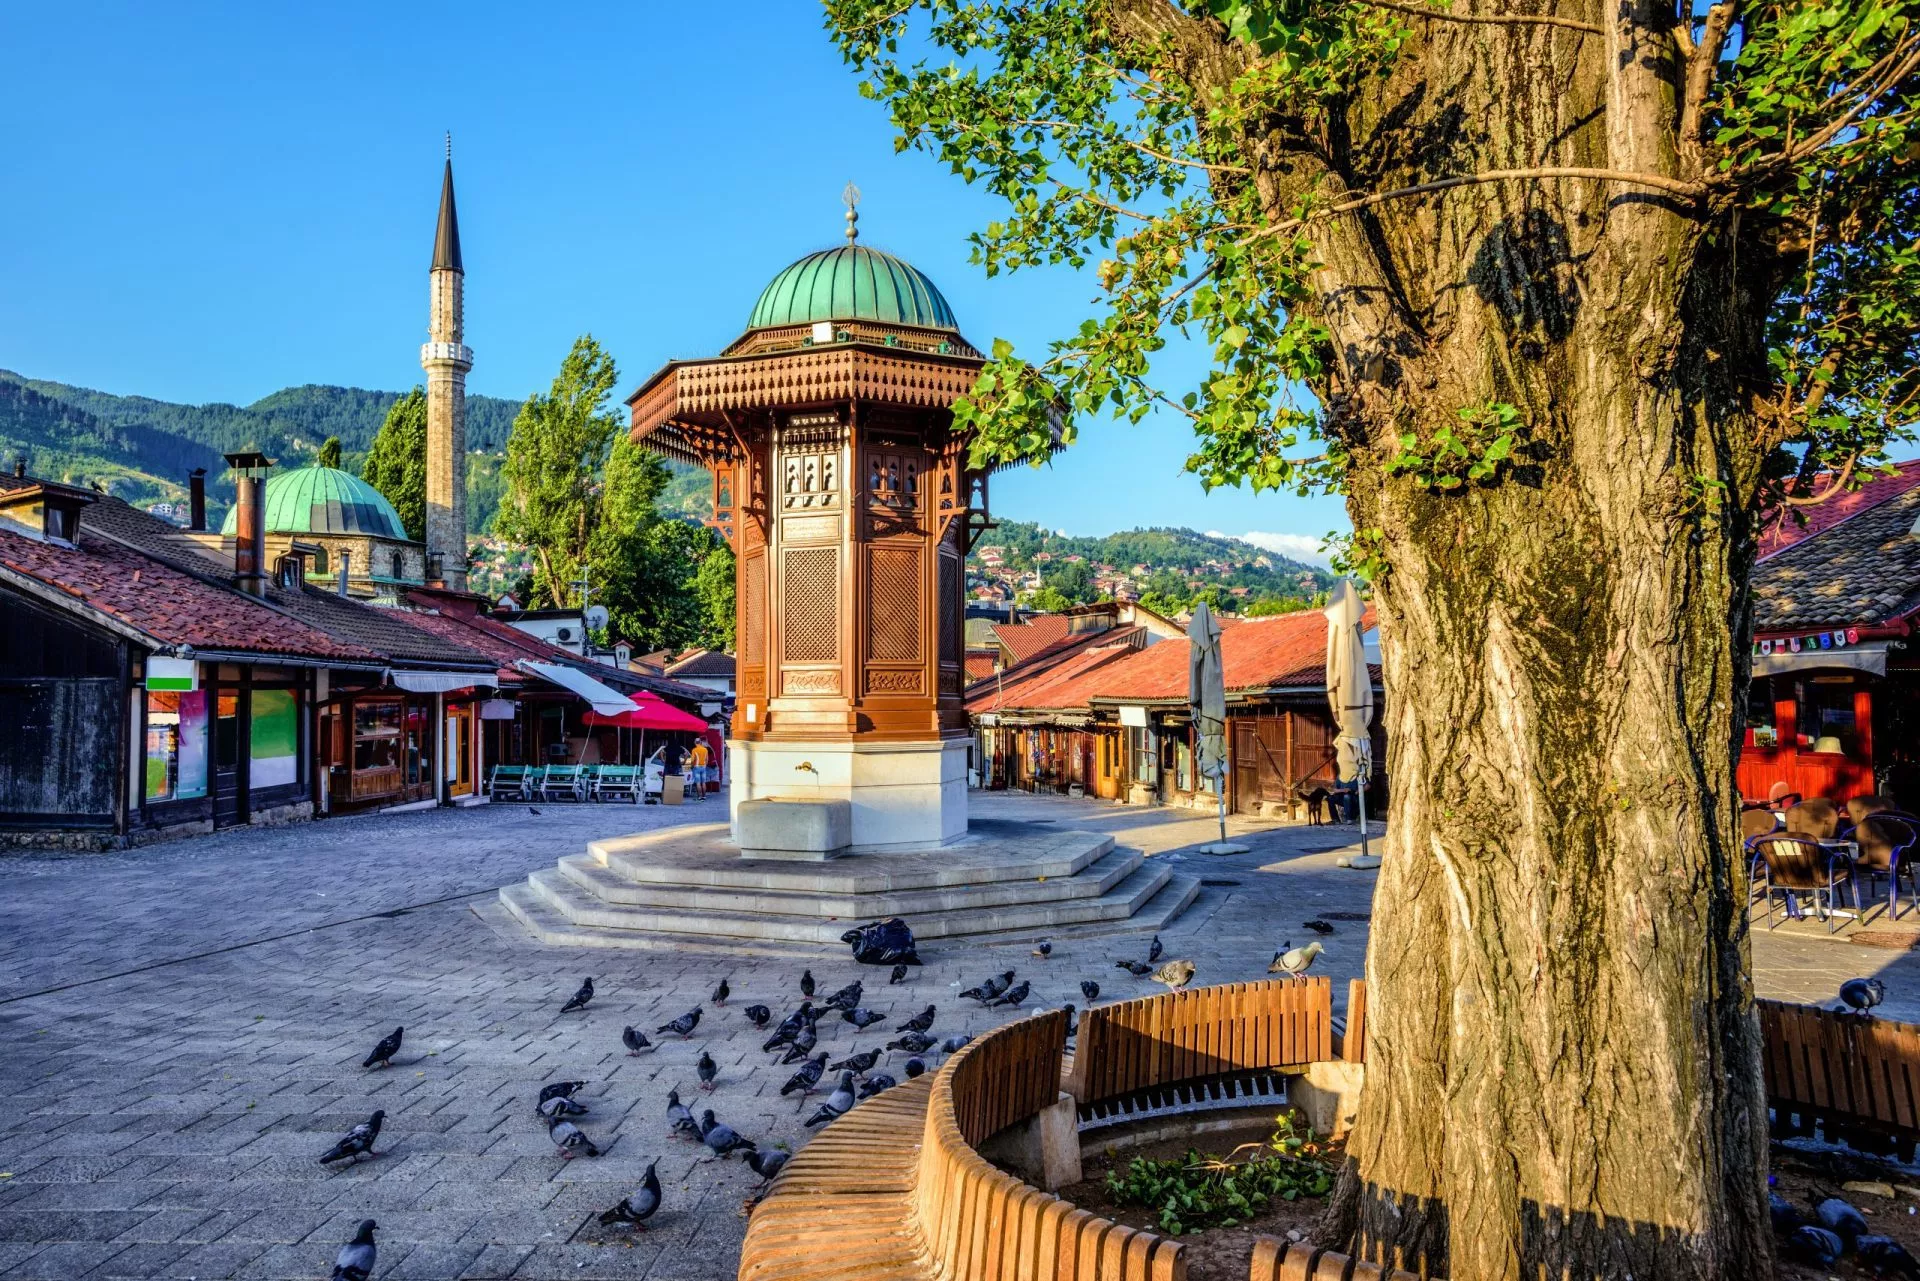 Sebilj fountain in the Old Town of Sarajevo, Bosnia